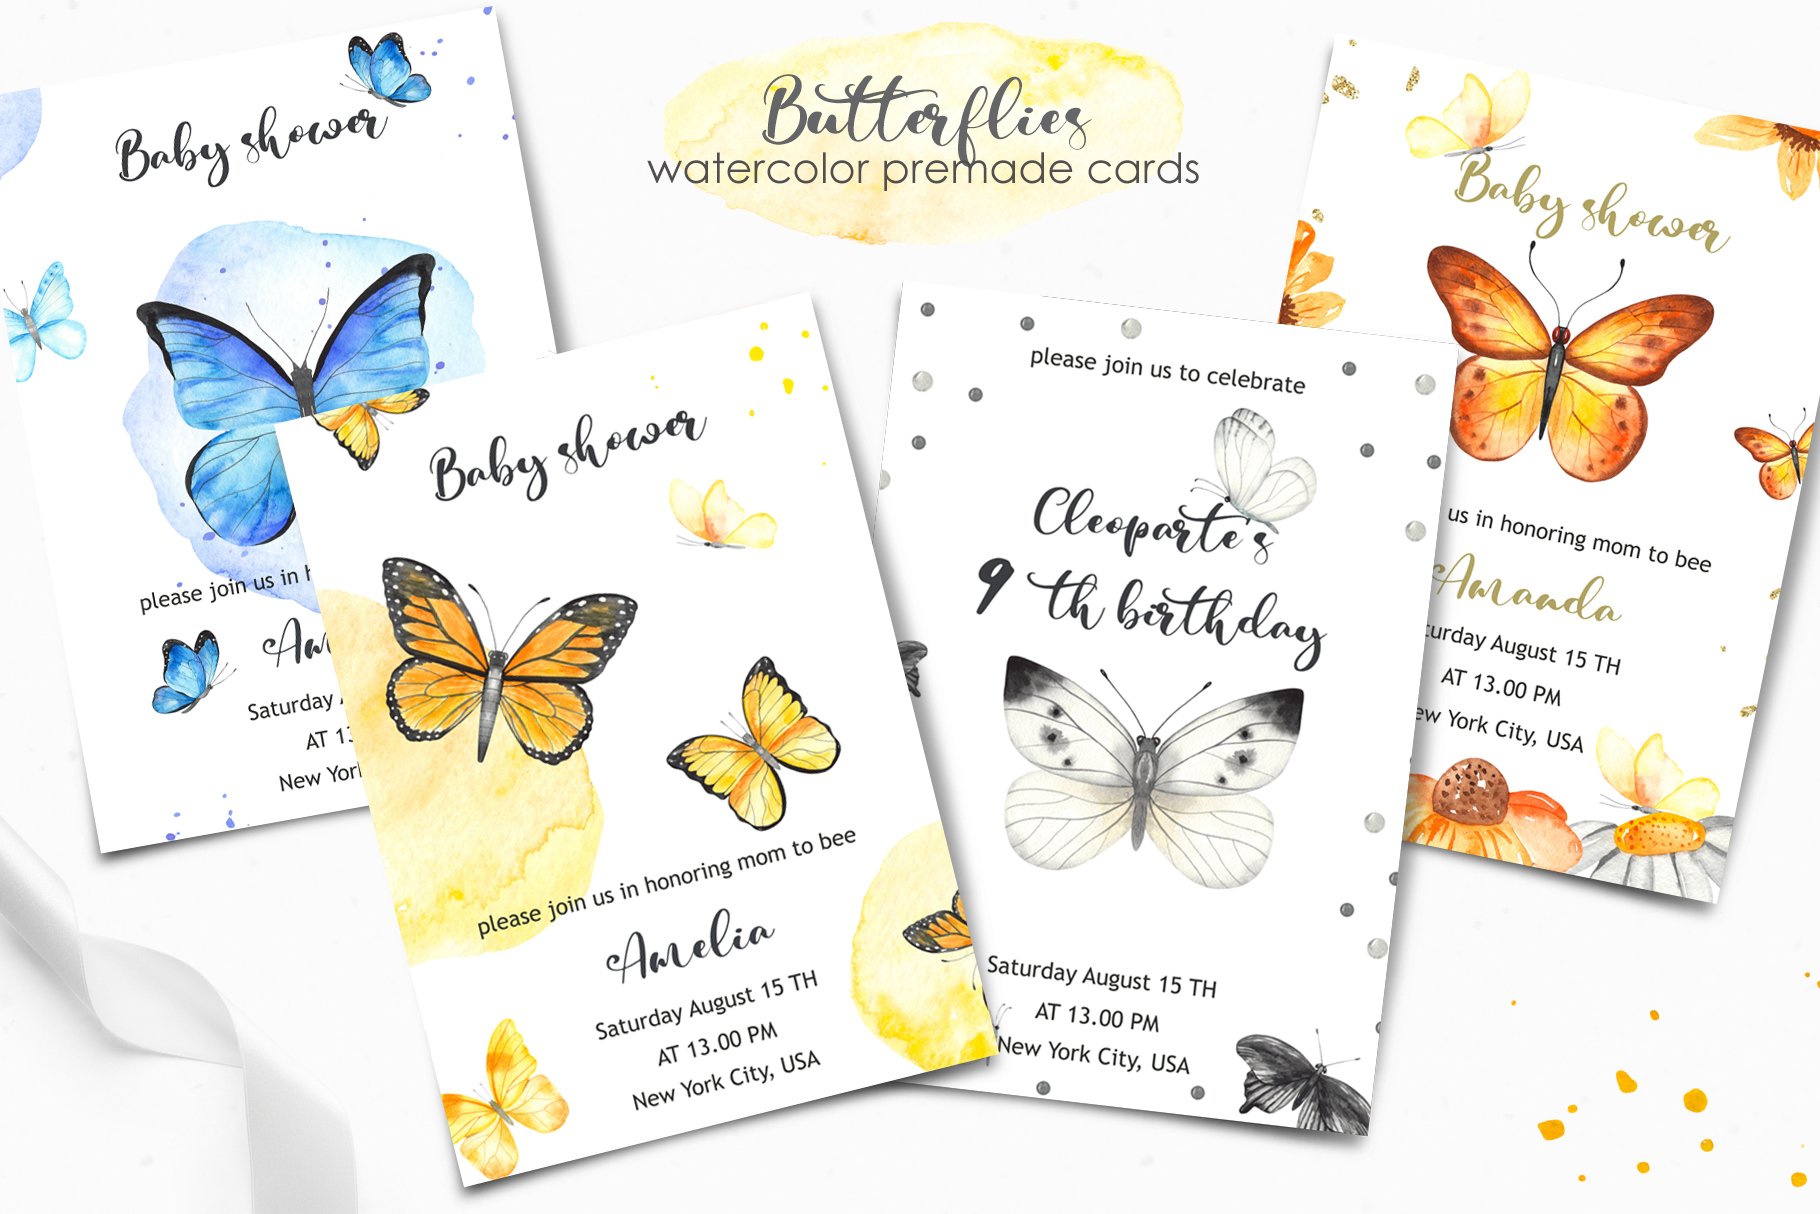 butterflies watercolor premade cards 10